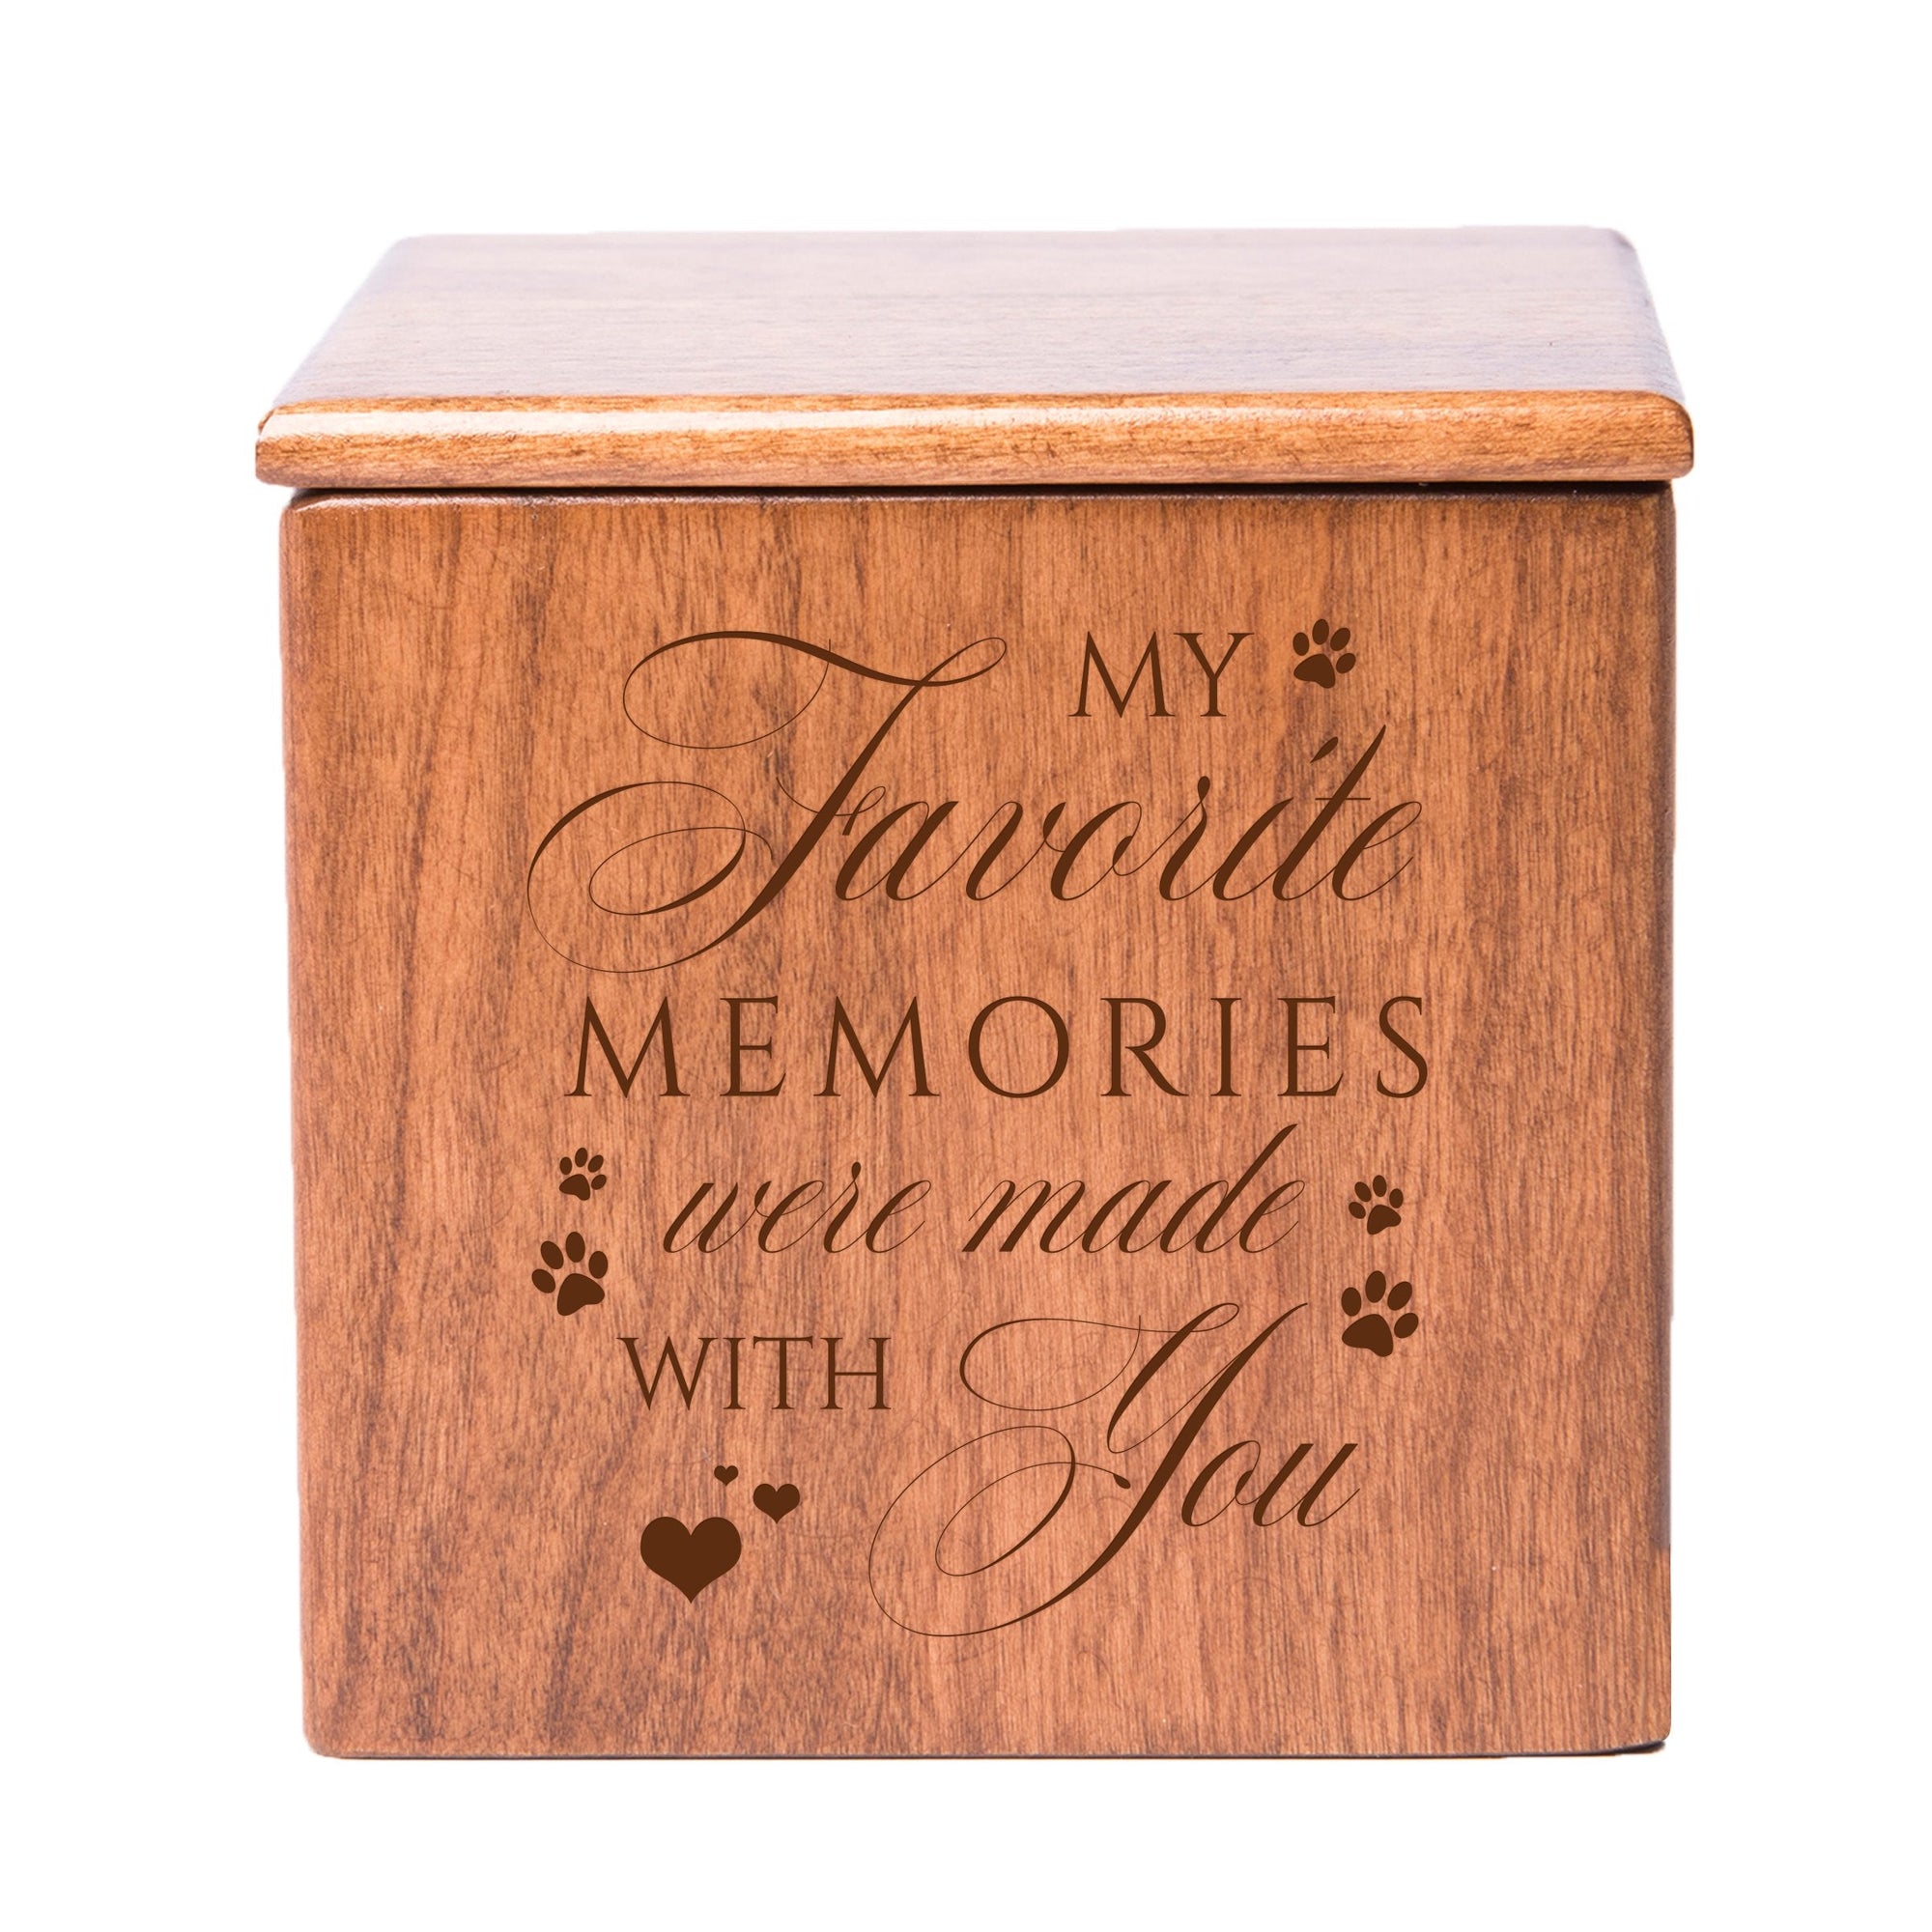 Cherry Pet Memorial 3.5x3.5 Keepsake Urn with phrase "My Favorite Memories"